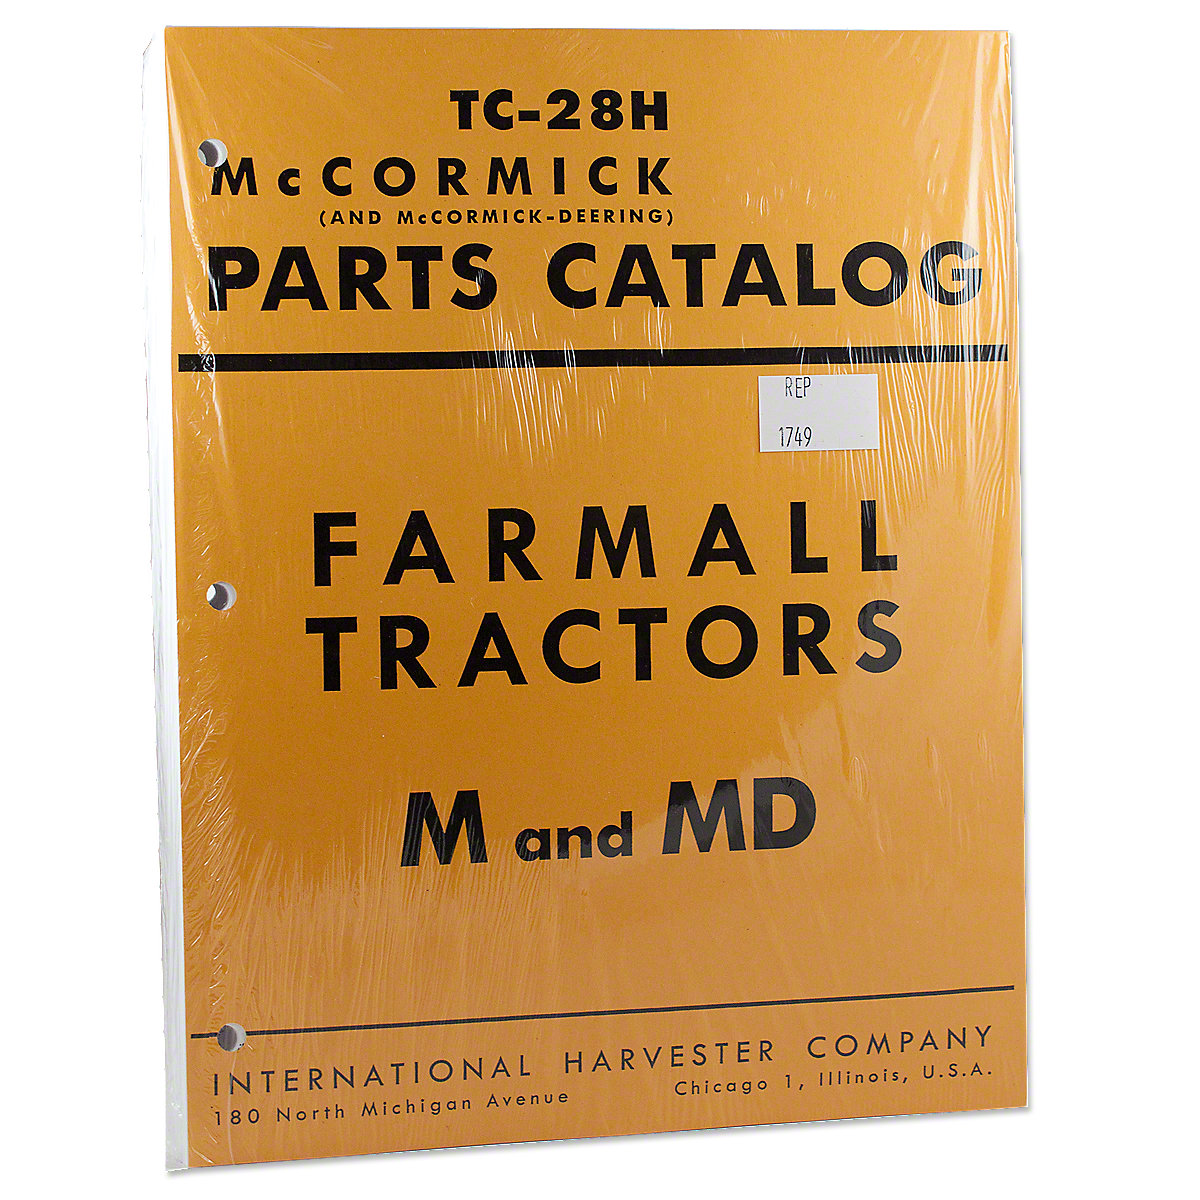 International M, MD, MV, MDV Parts Manual Reprint